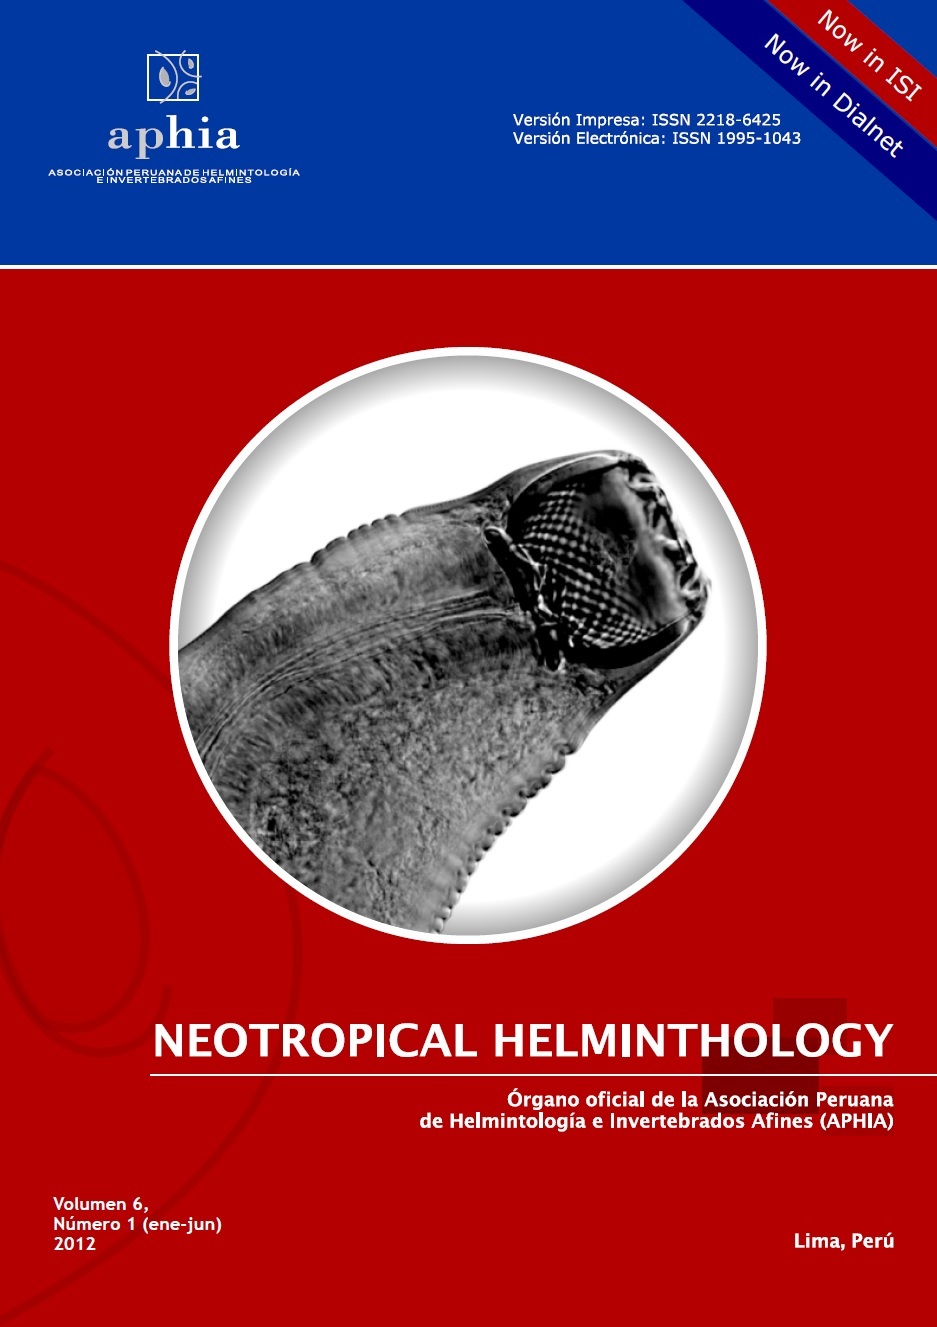 					View Vol. 6 No. 1 (2012): Neotropical Helminthology
				